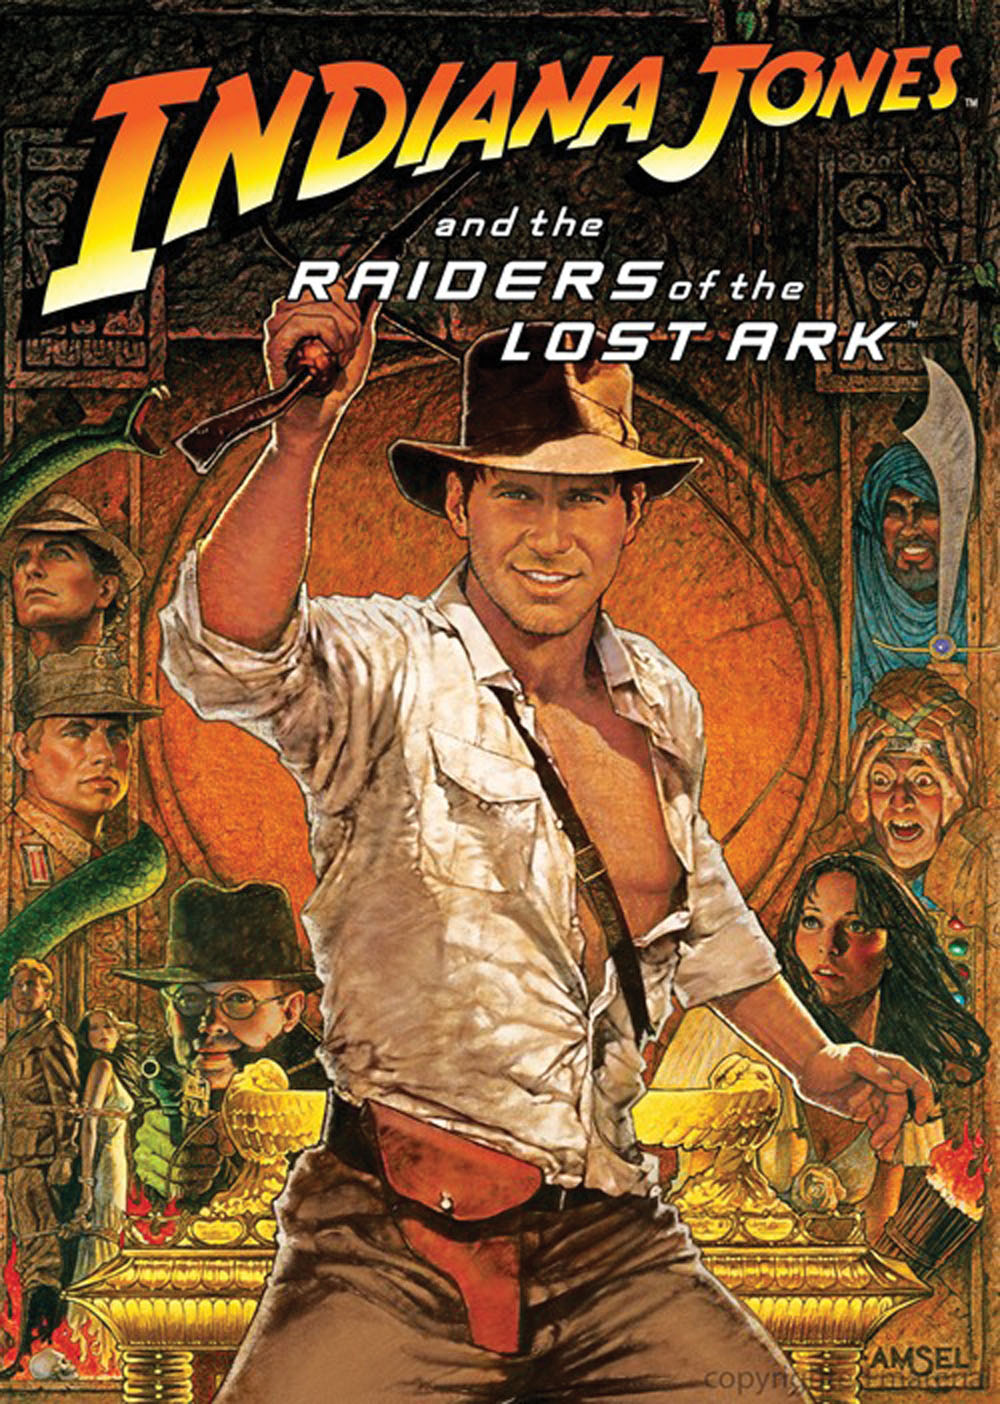 Raiders of the Lost Ark: Budget 18 million Box office 389,925,971 million